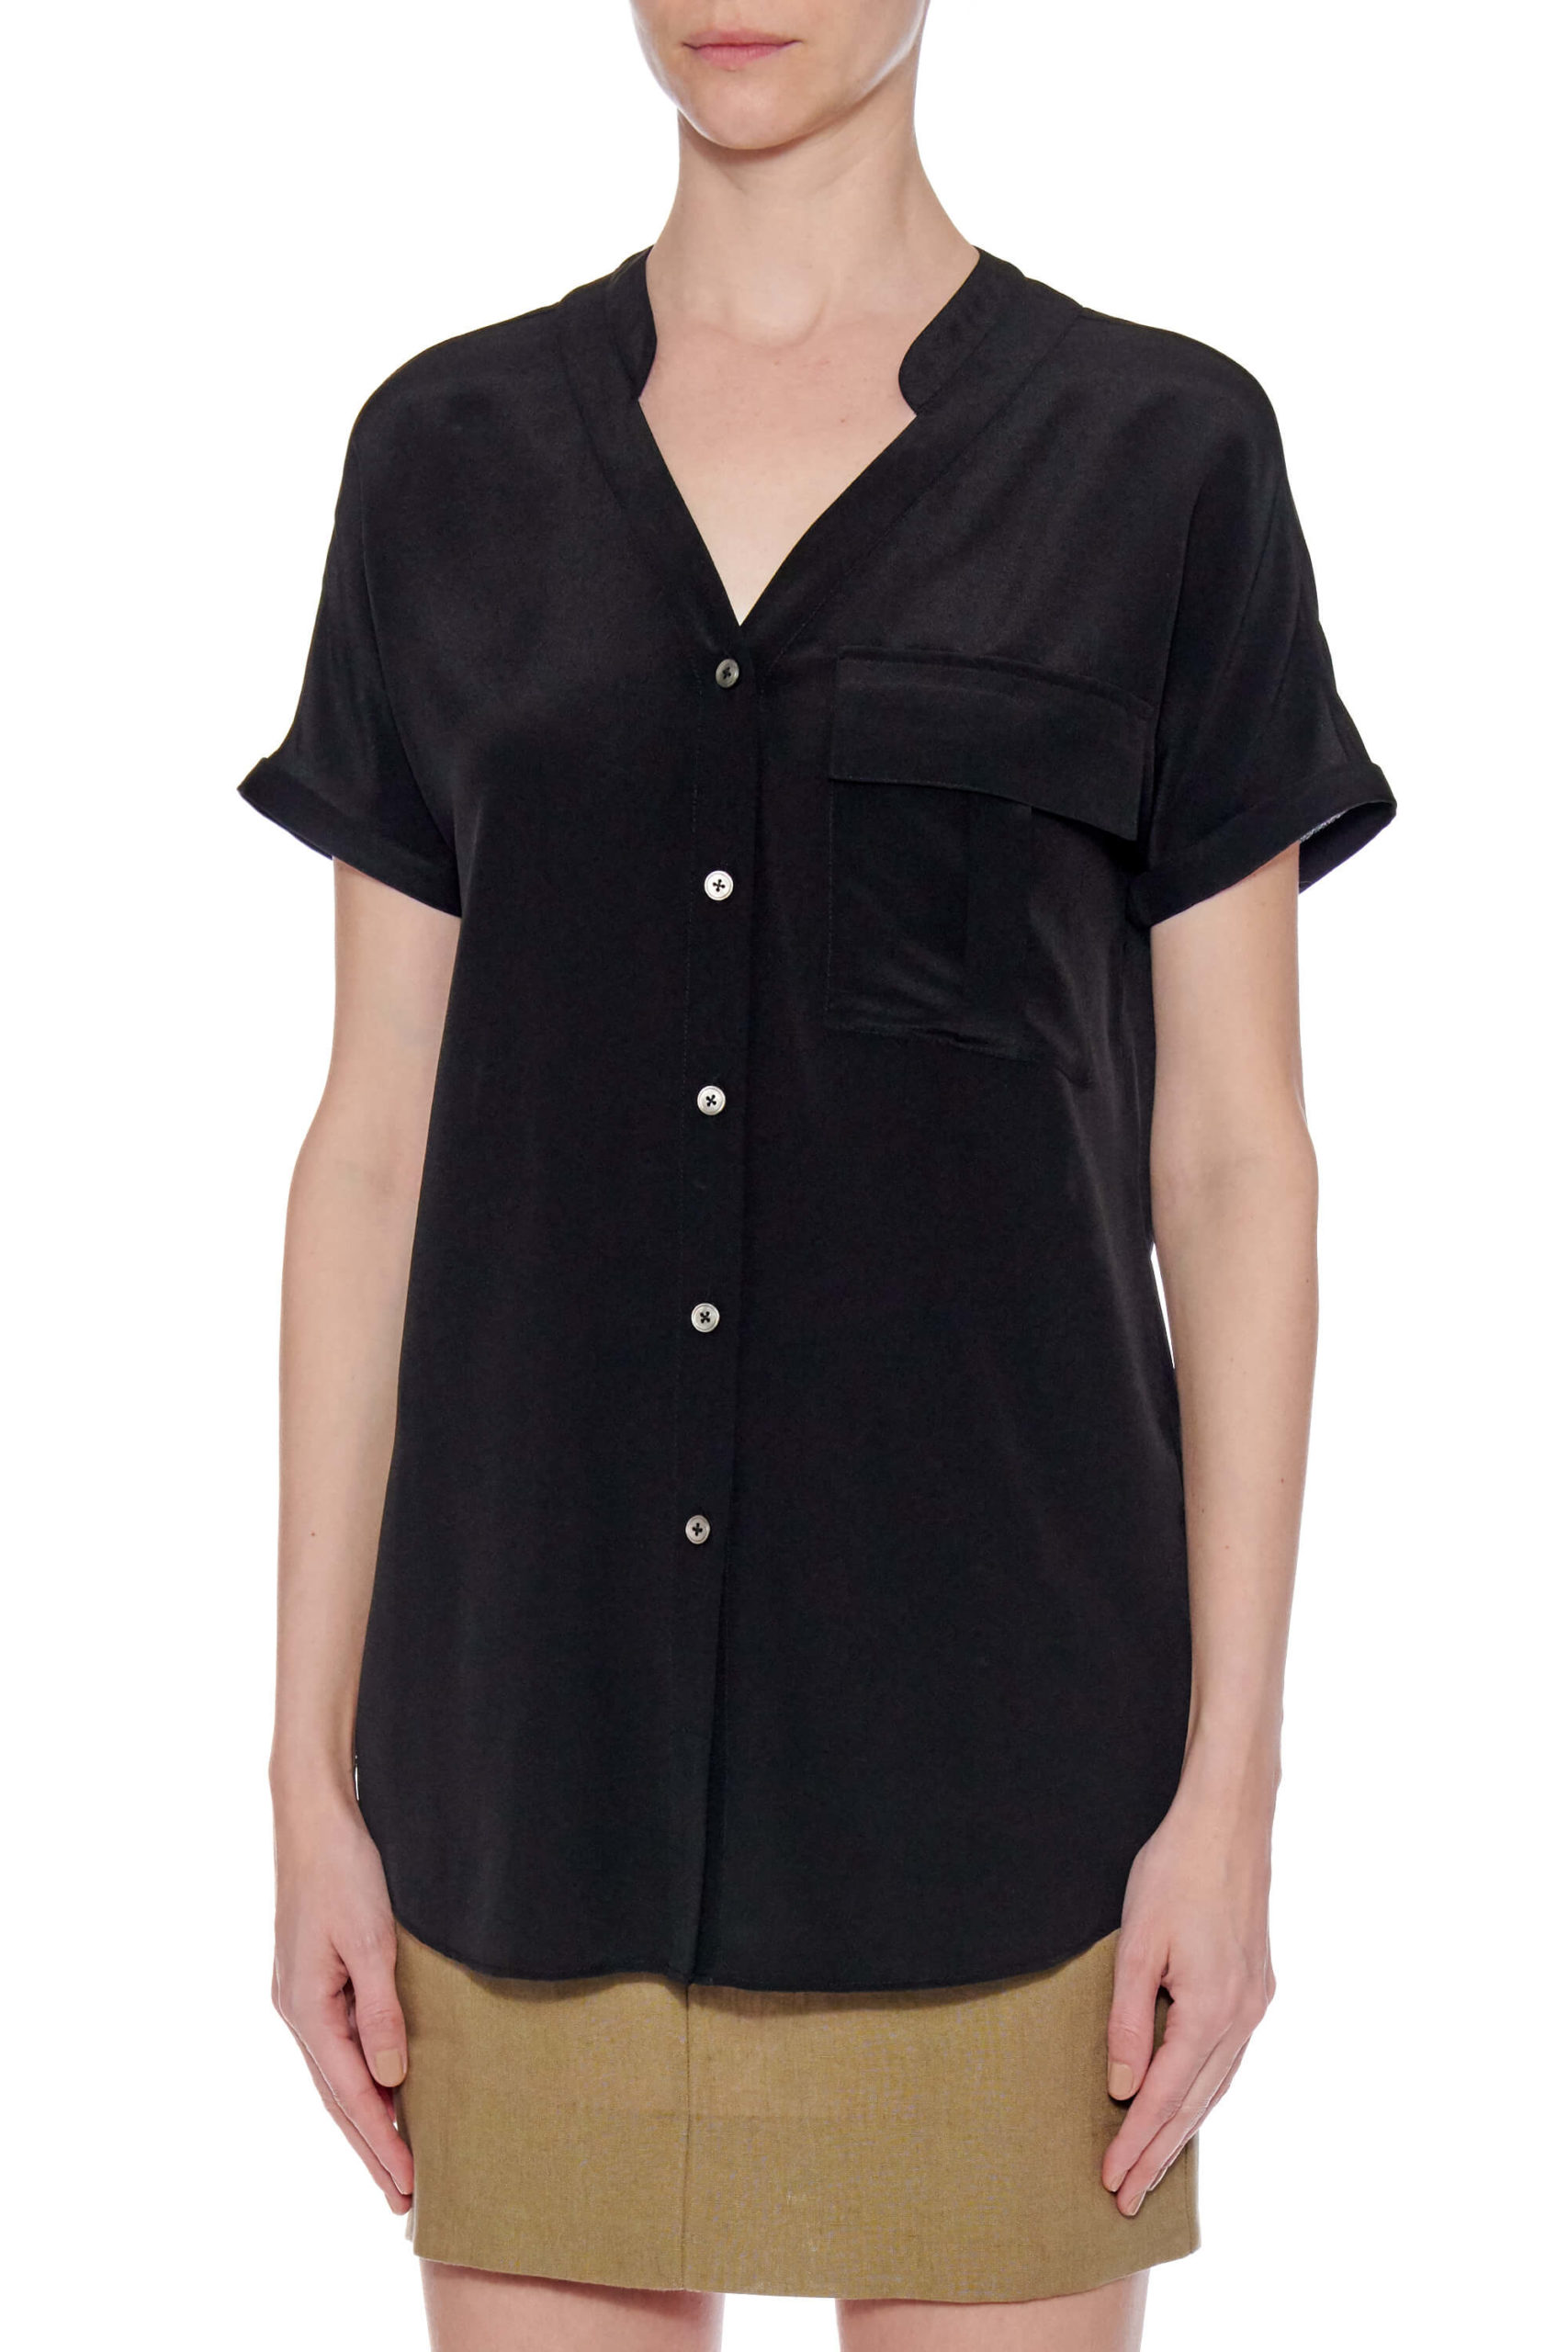 Lleida Top – Short sleeve loose fit summer blouse in black